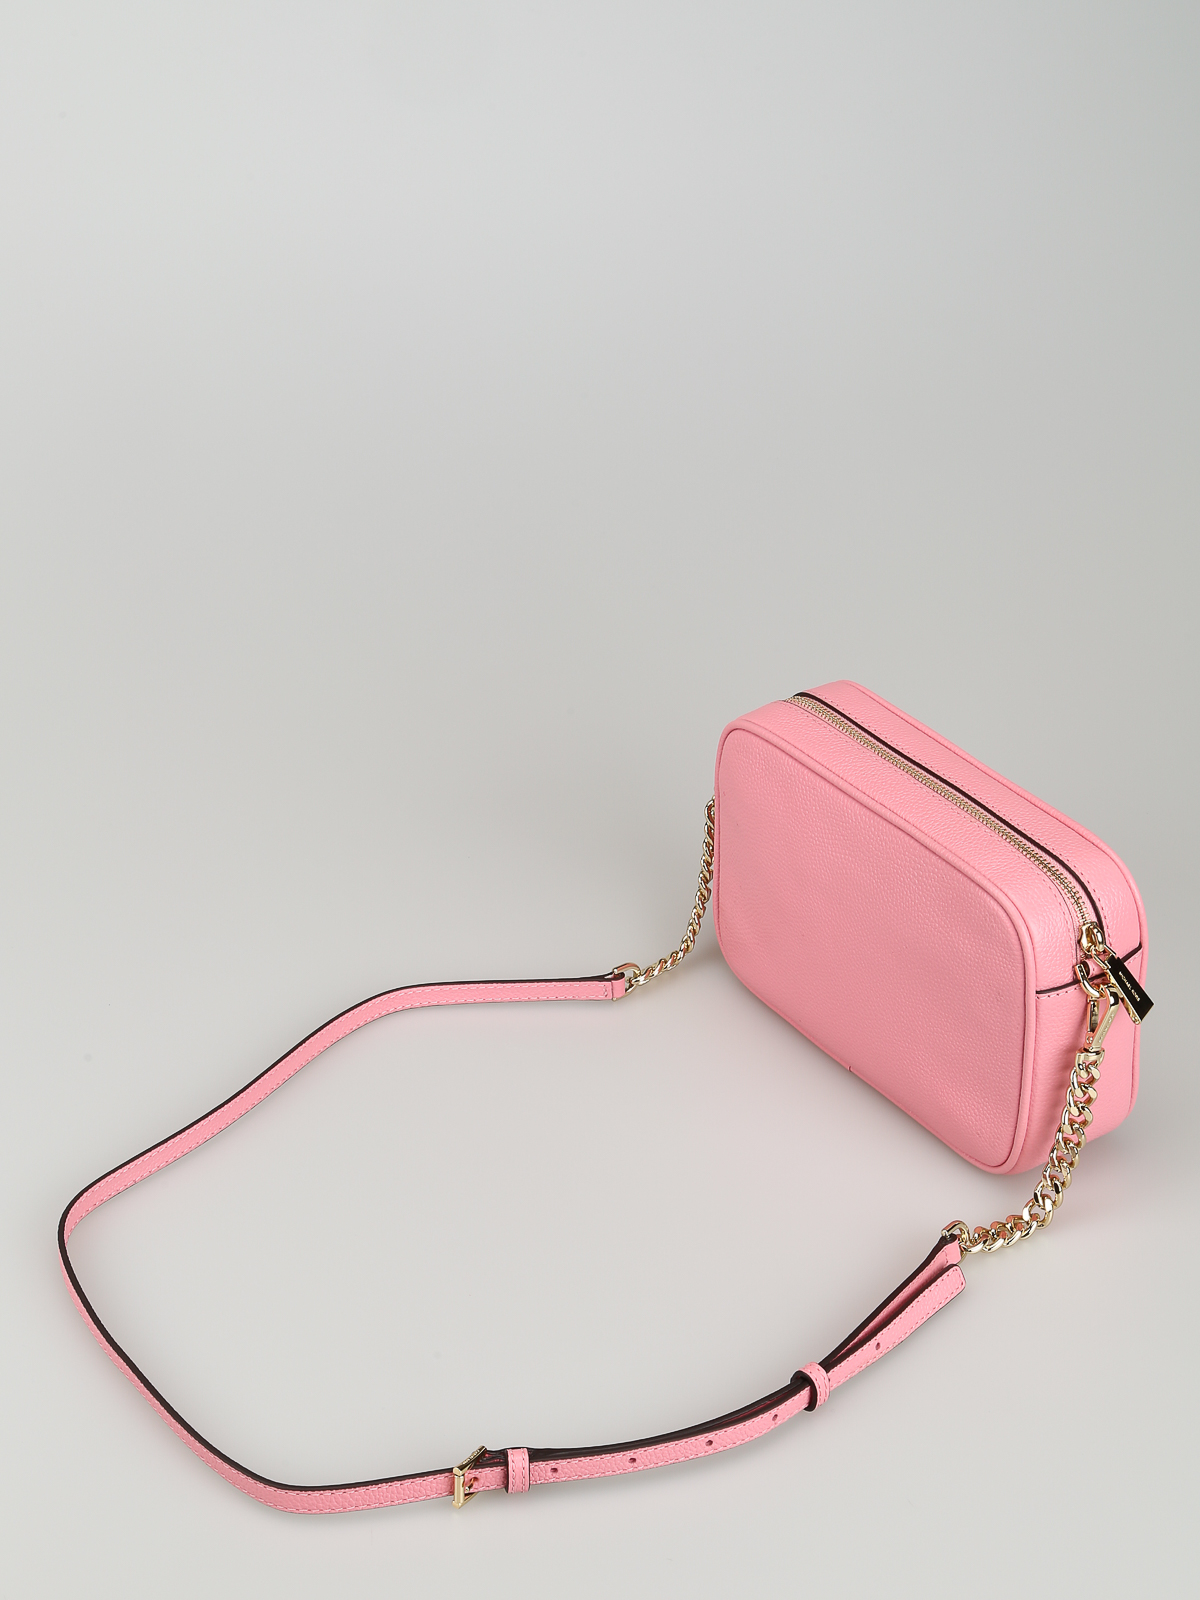 Produktivitet rysten analogi Cross body bags Michael Kors - Pink leather camera bag - 32T8TF5M2L611